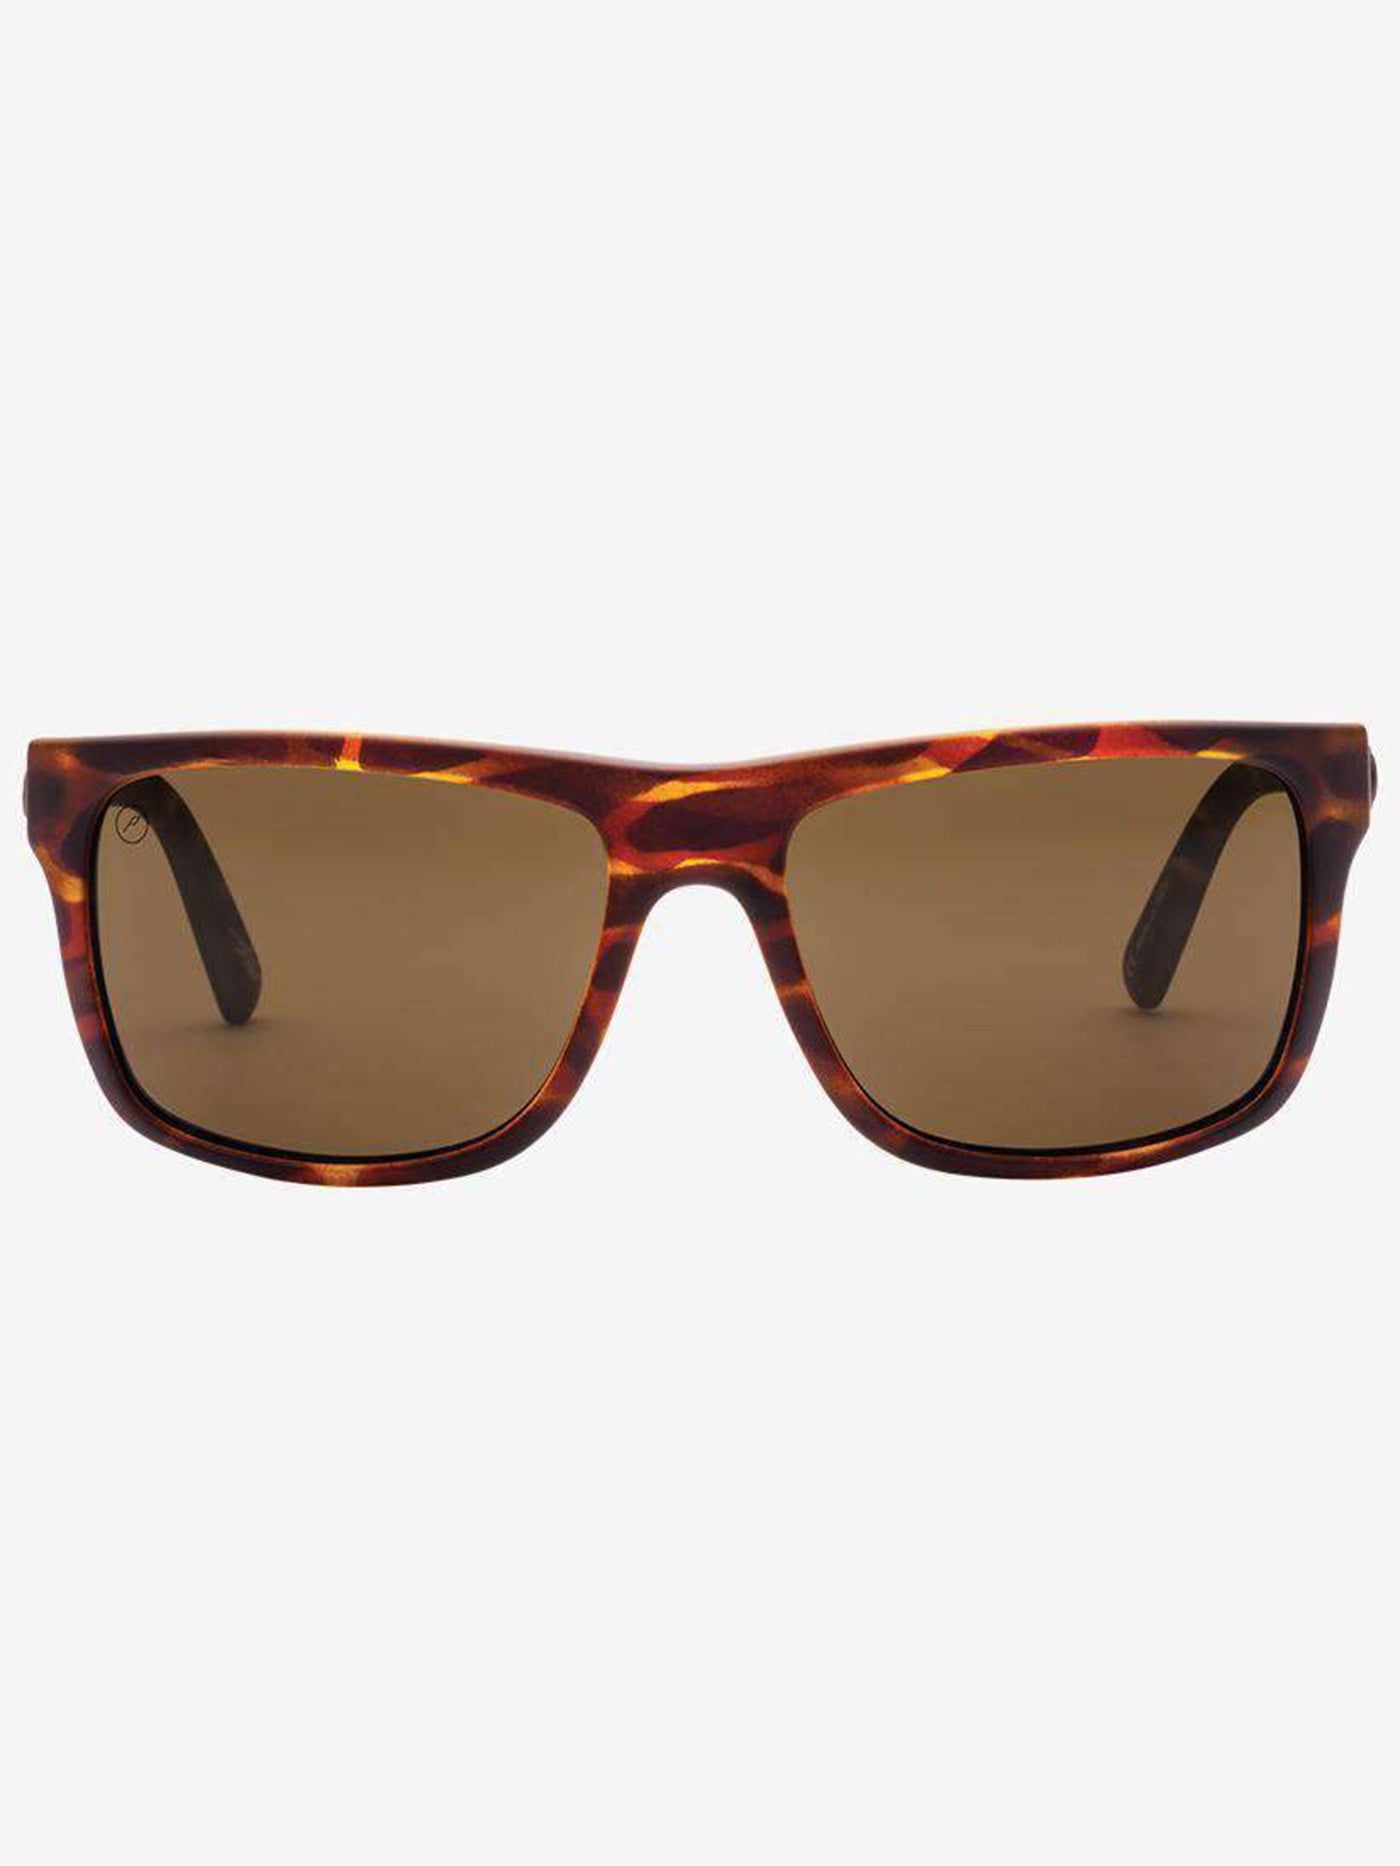 Electric Swingarm Matte Tortoise Sunglasses